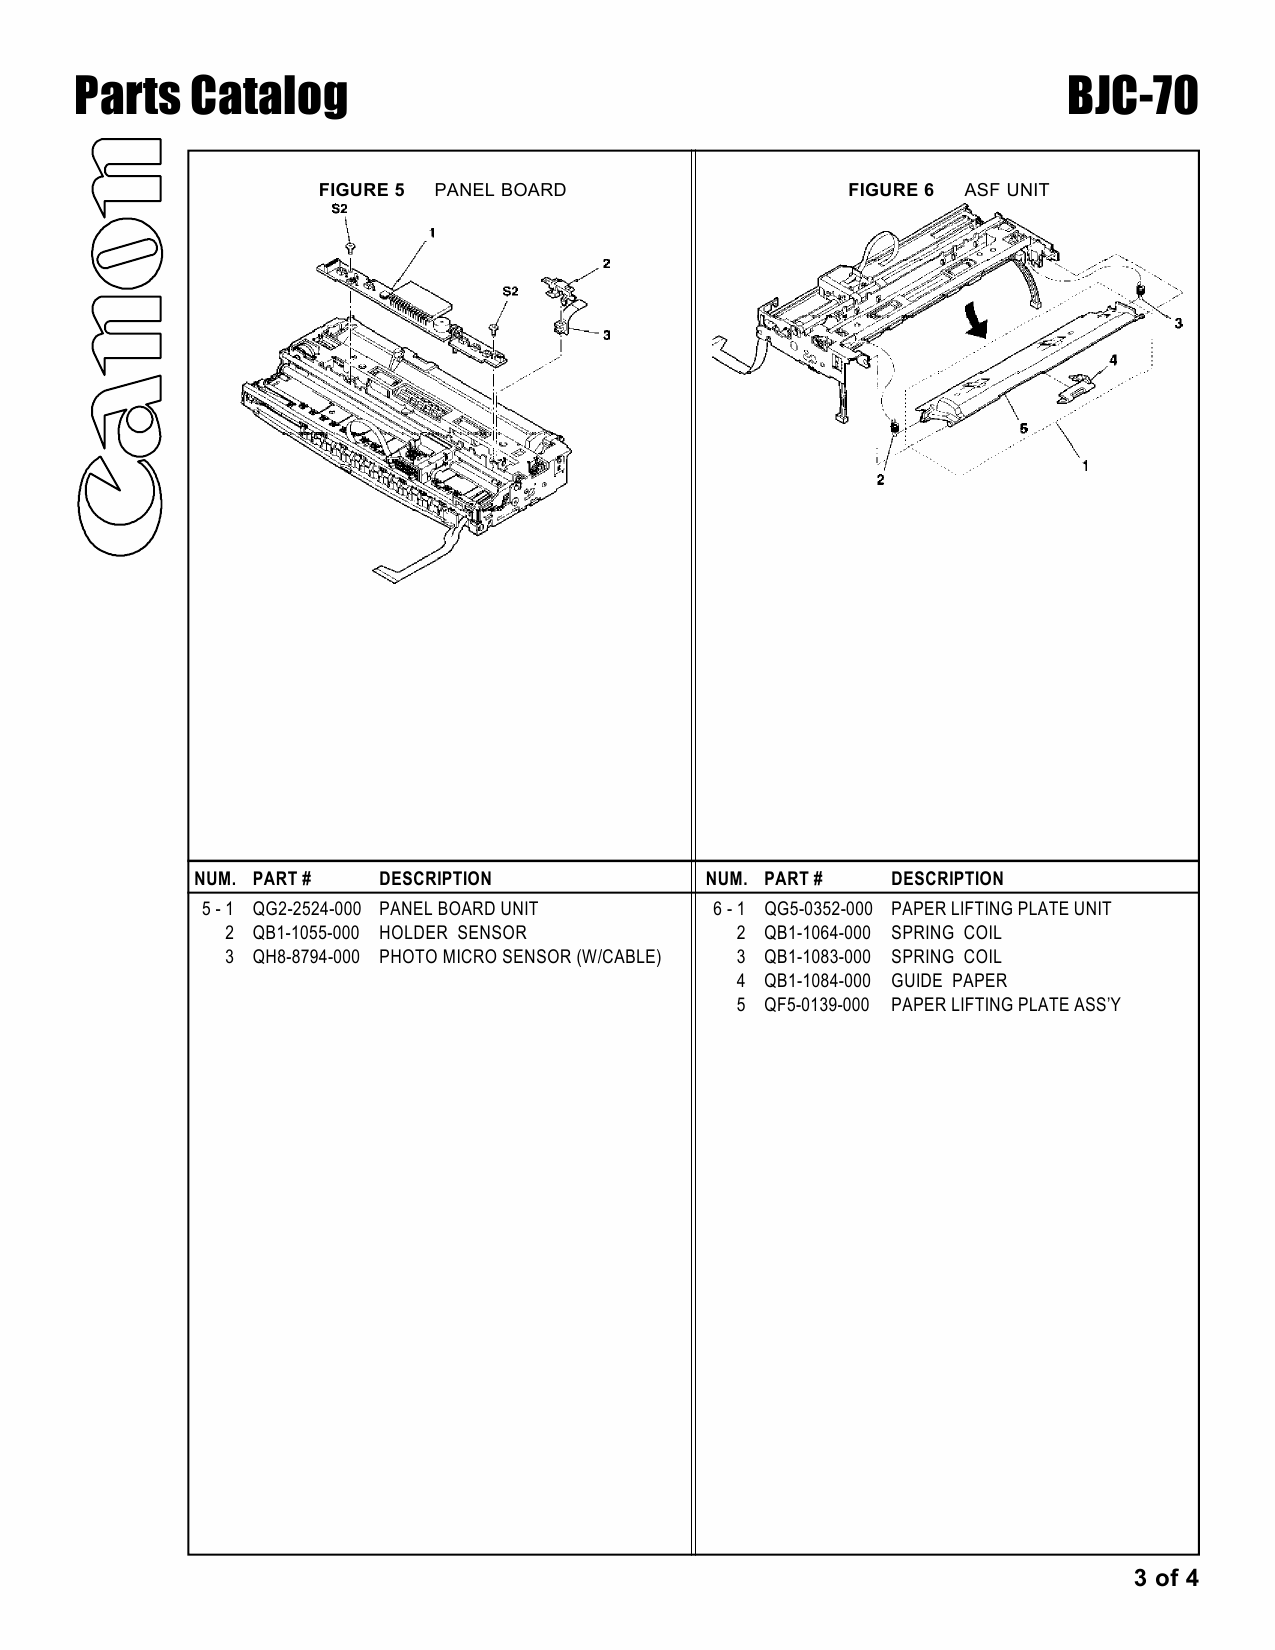 Canon BubbleJet BJC-70 Parts Catalog Manual-4